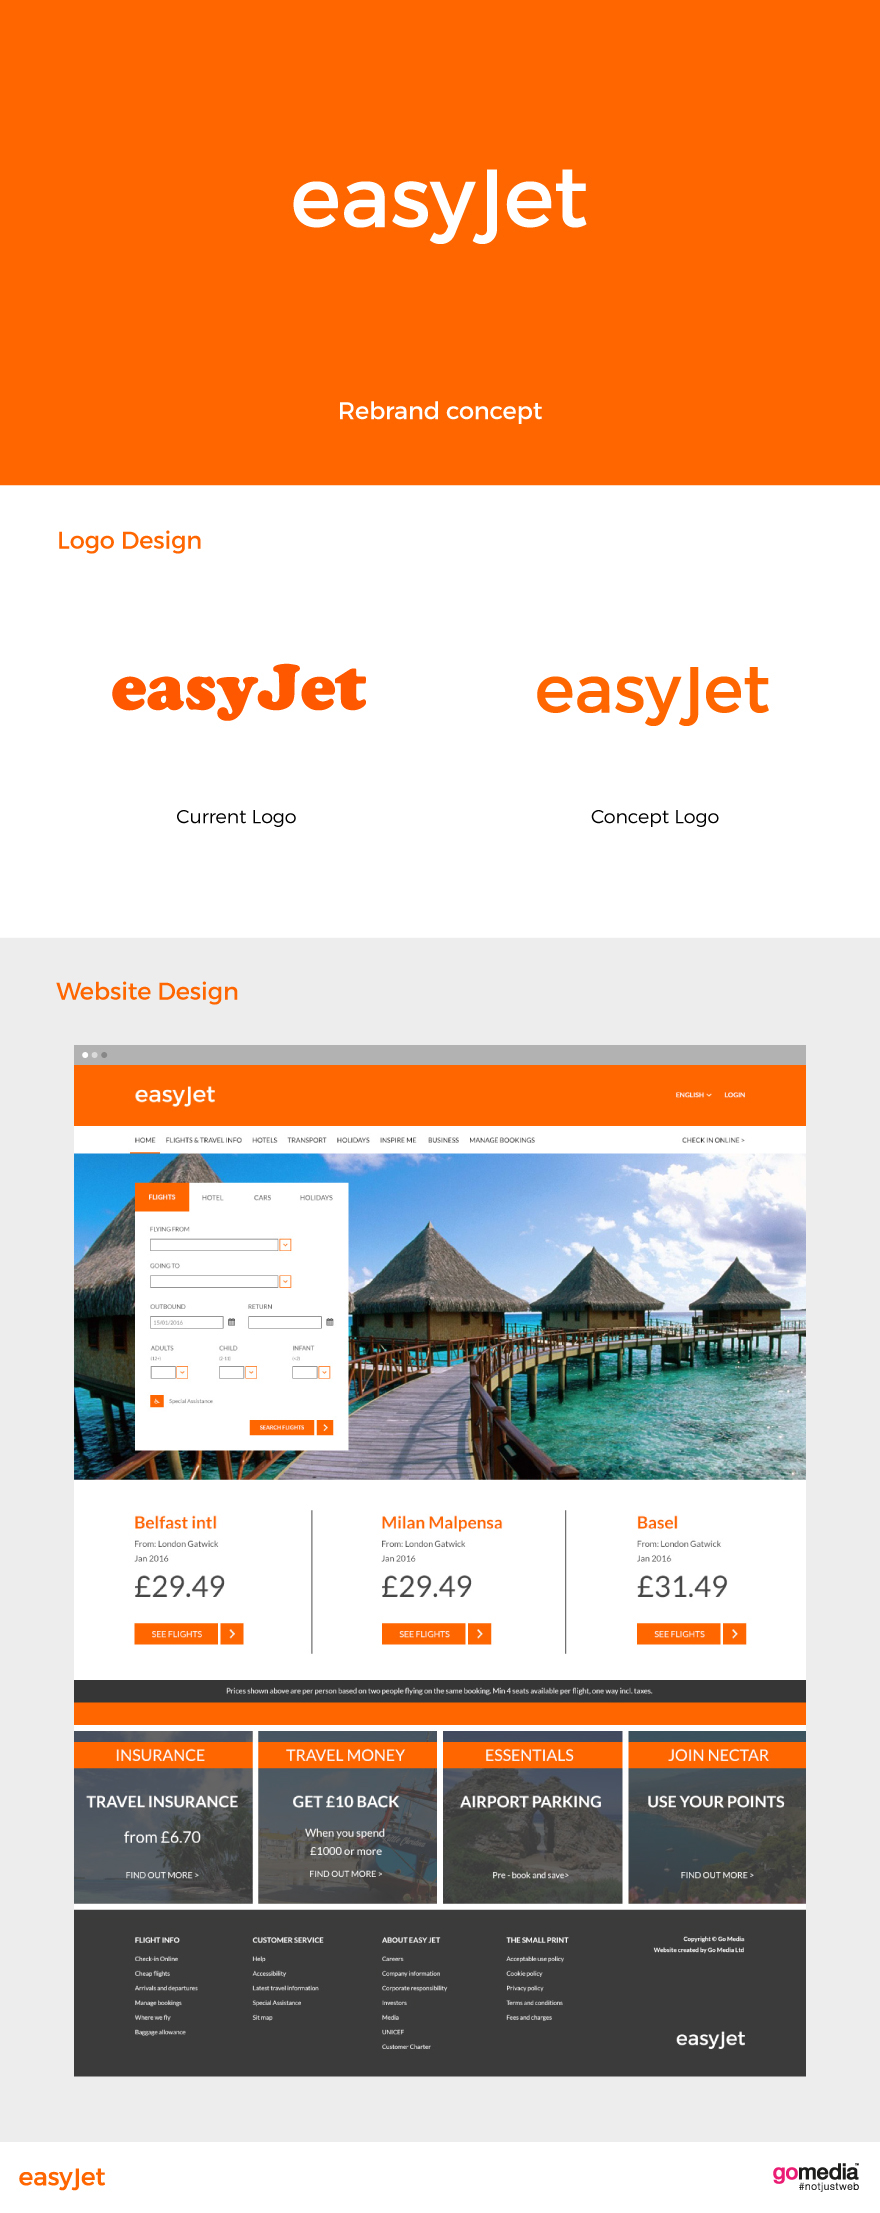 easyjet airline Rebrand concept revamp Practice Experience concept logo concept website new website Website Expression art business professional